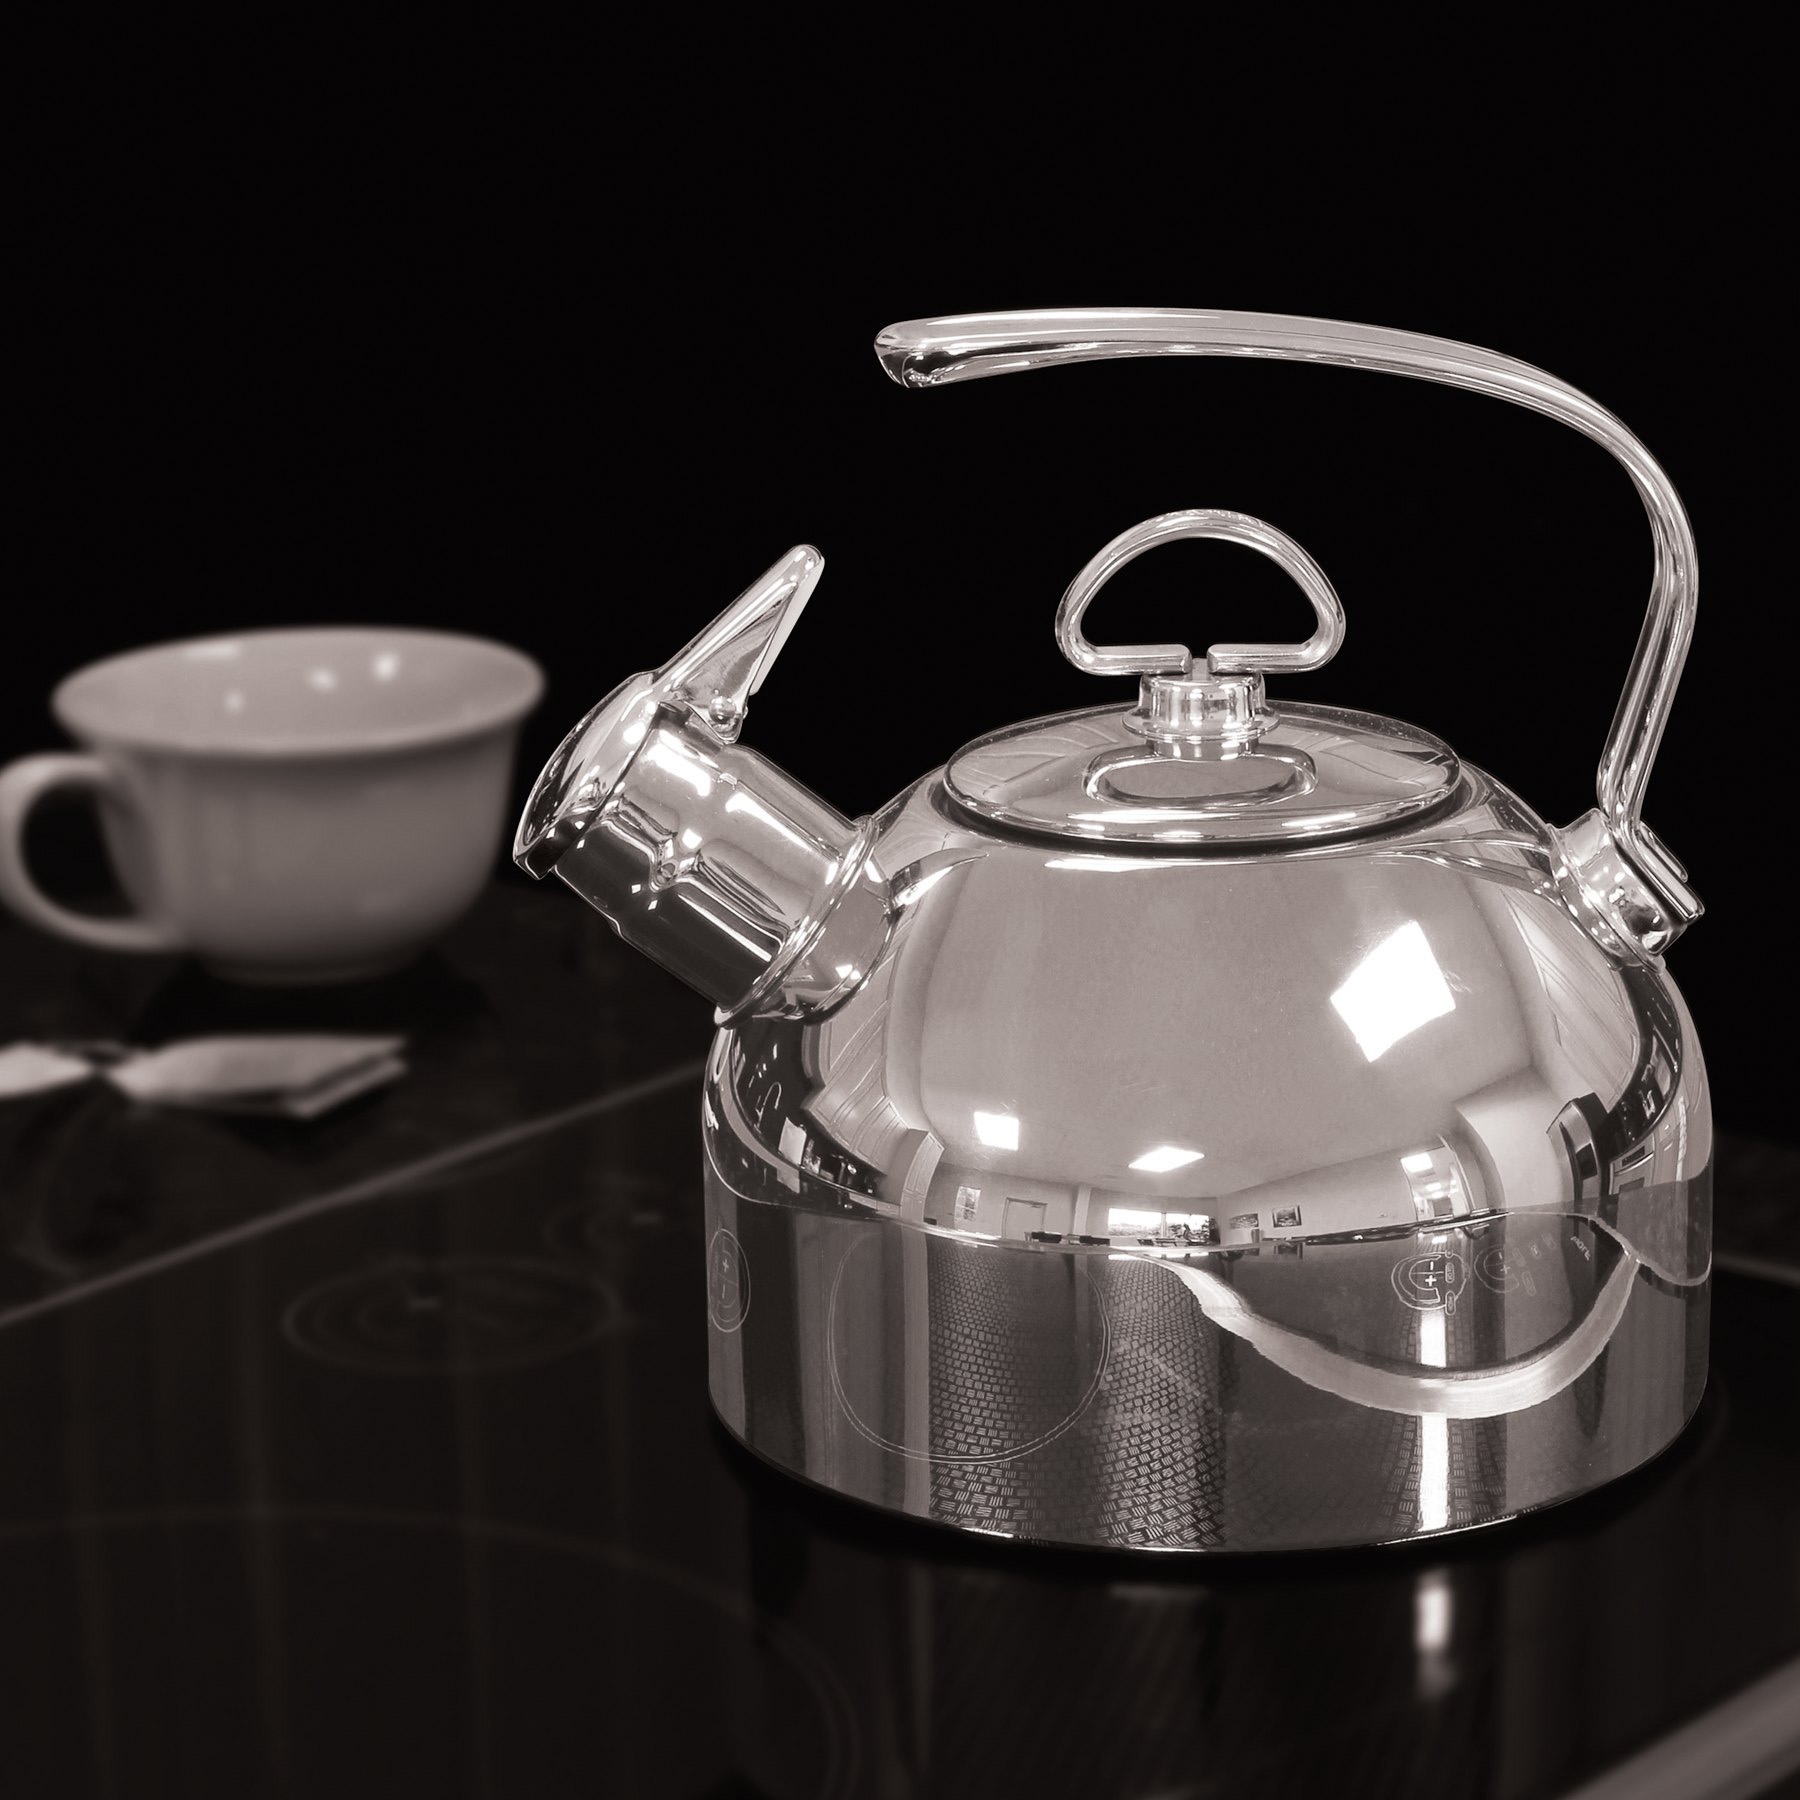 Chantal tea kettle on stove with teacup